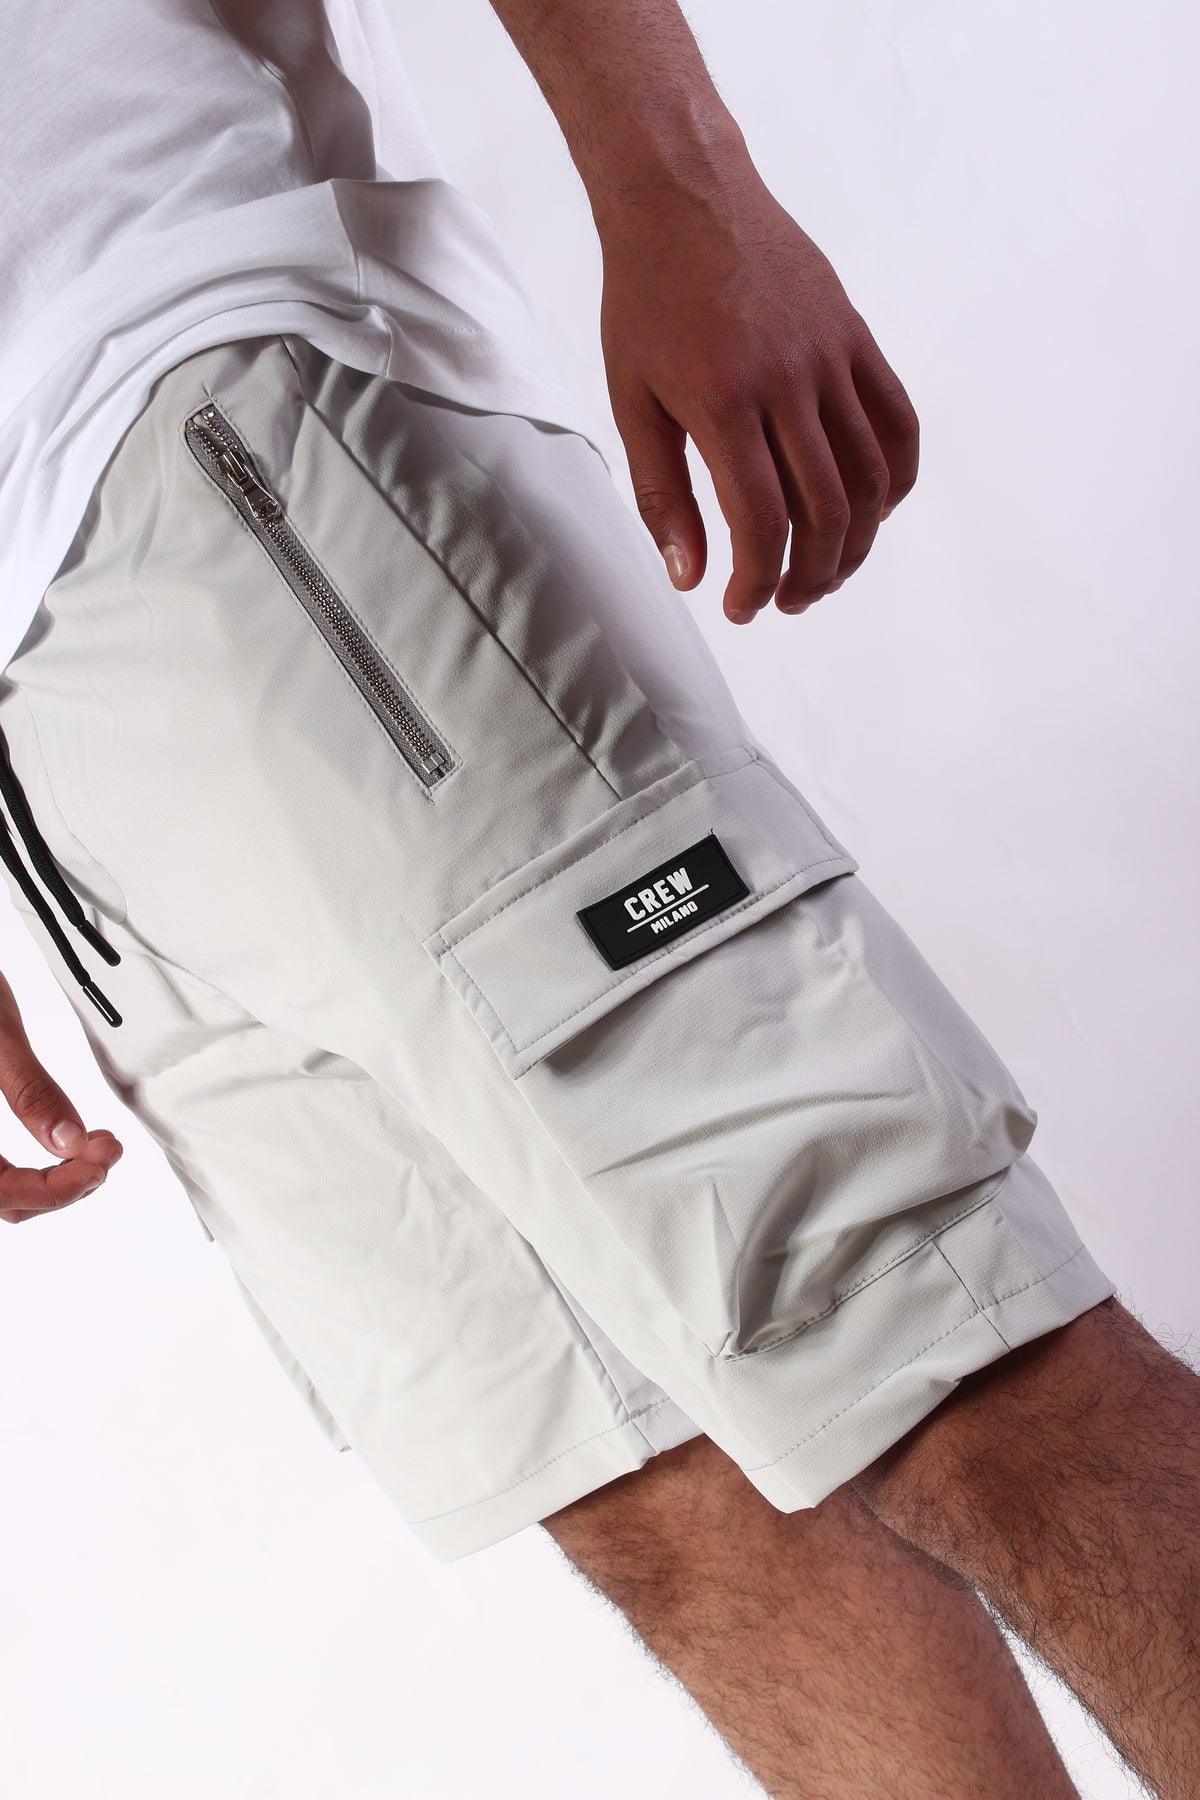 CREW Light Grey Short Cargo Pants Zipper Long Pocket